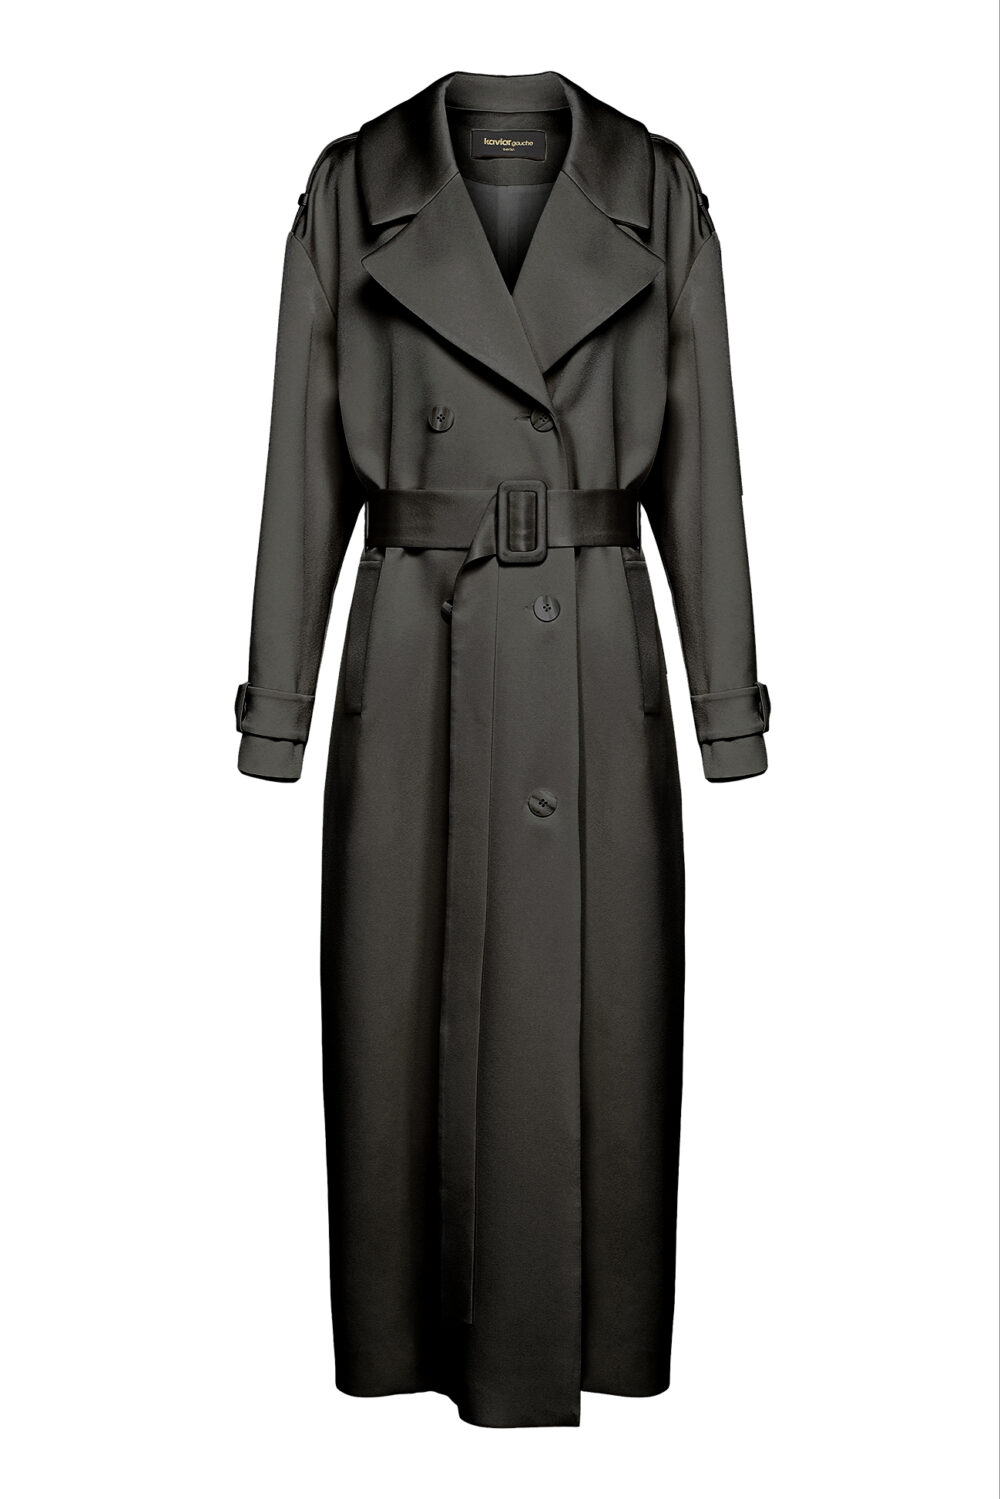 Clochard Coat in black by Kaviar Gauche